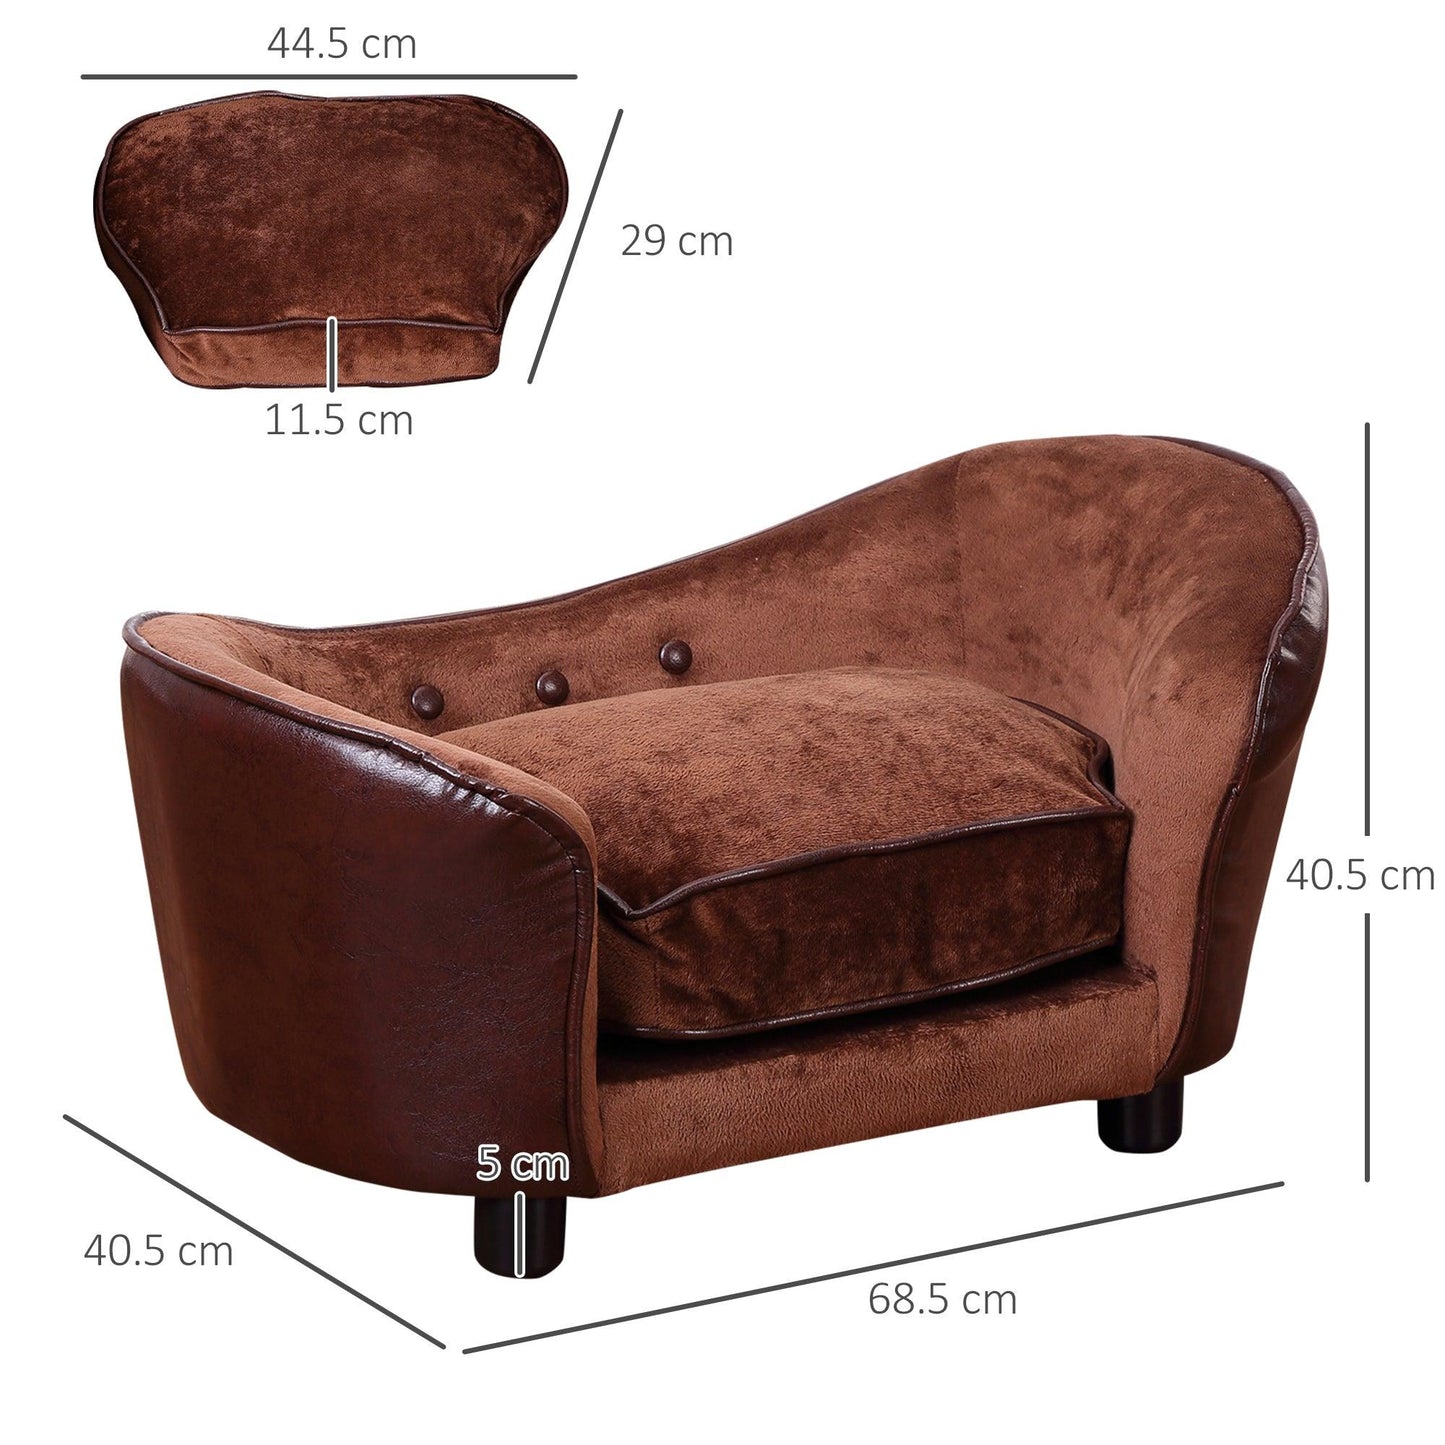 PawHut Dog Sofa Chair W/ Legs Cushion for XS Dog Cat 68.5x40.5x40.5 cm, Brown - ALL4U RETAILER LTD